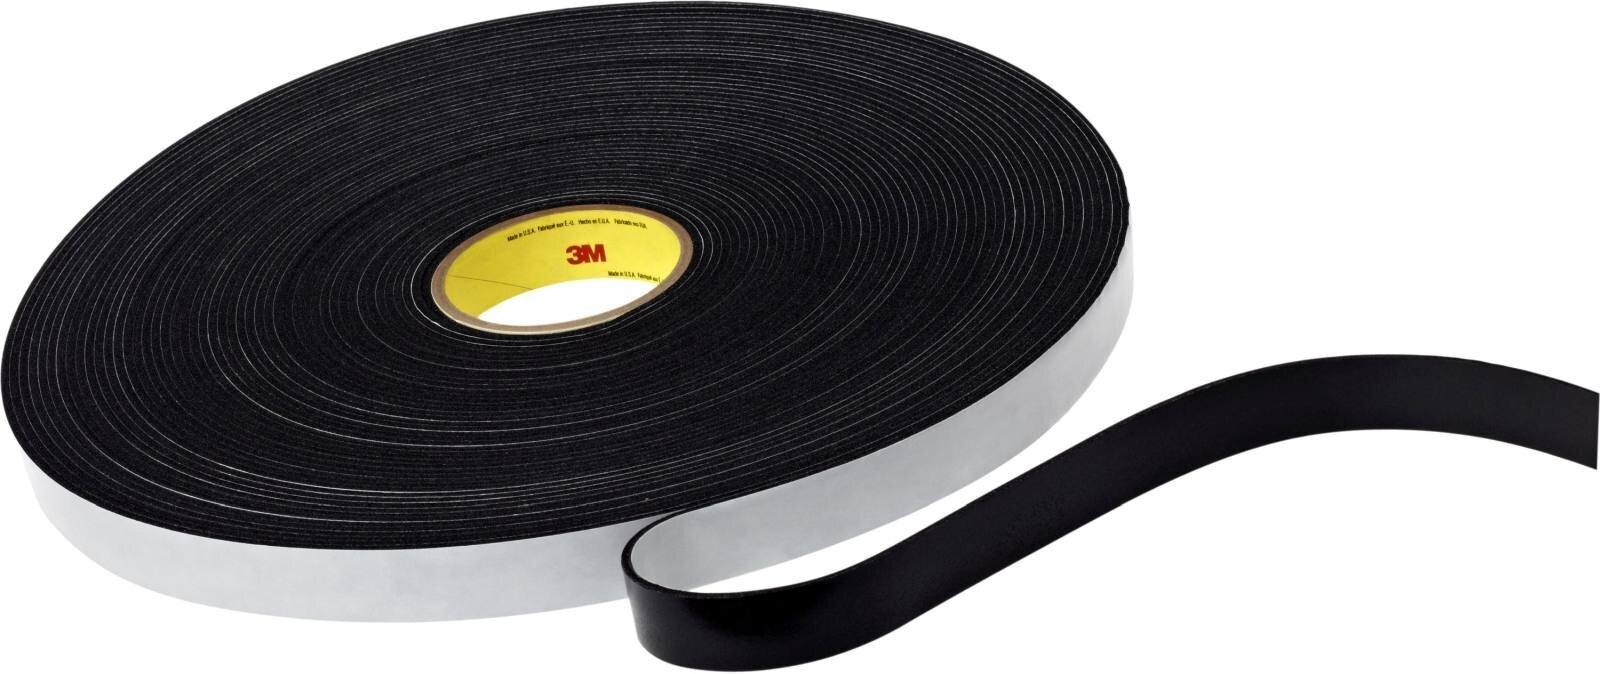 3M Single-sided vinyl foam adhesive tape 4508, black, 19 mm x 33 m, 3.2 mm